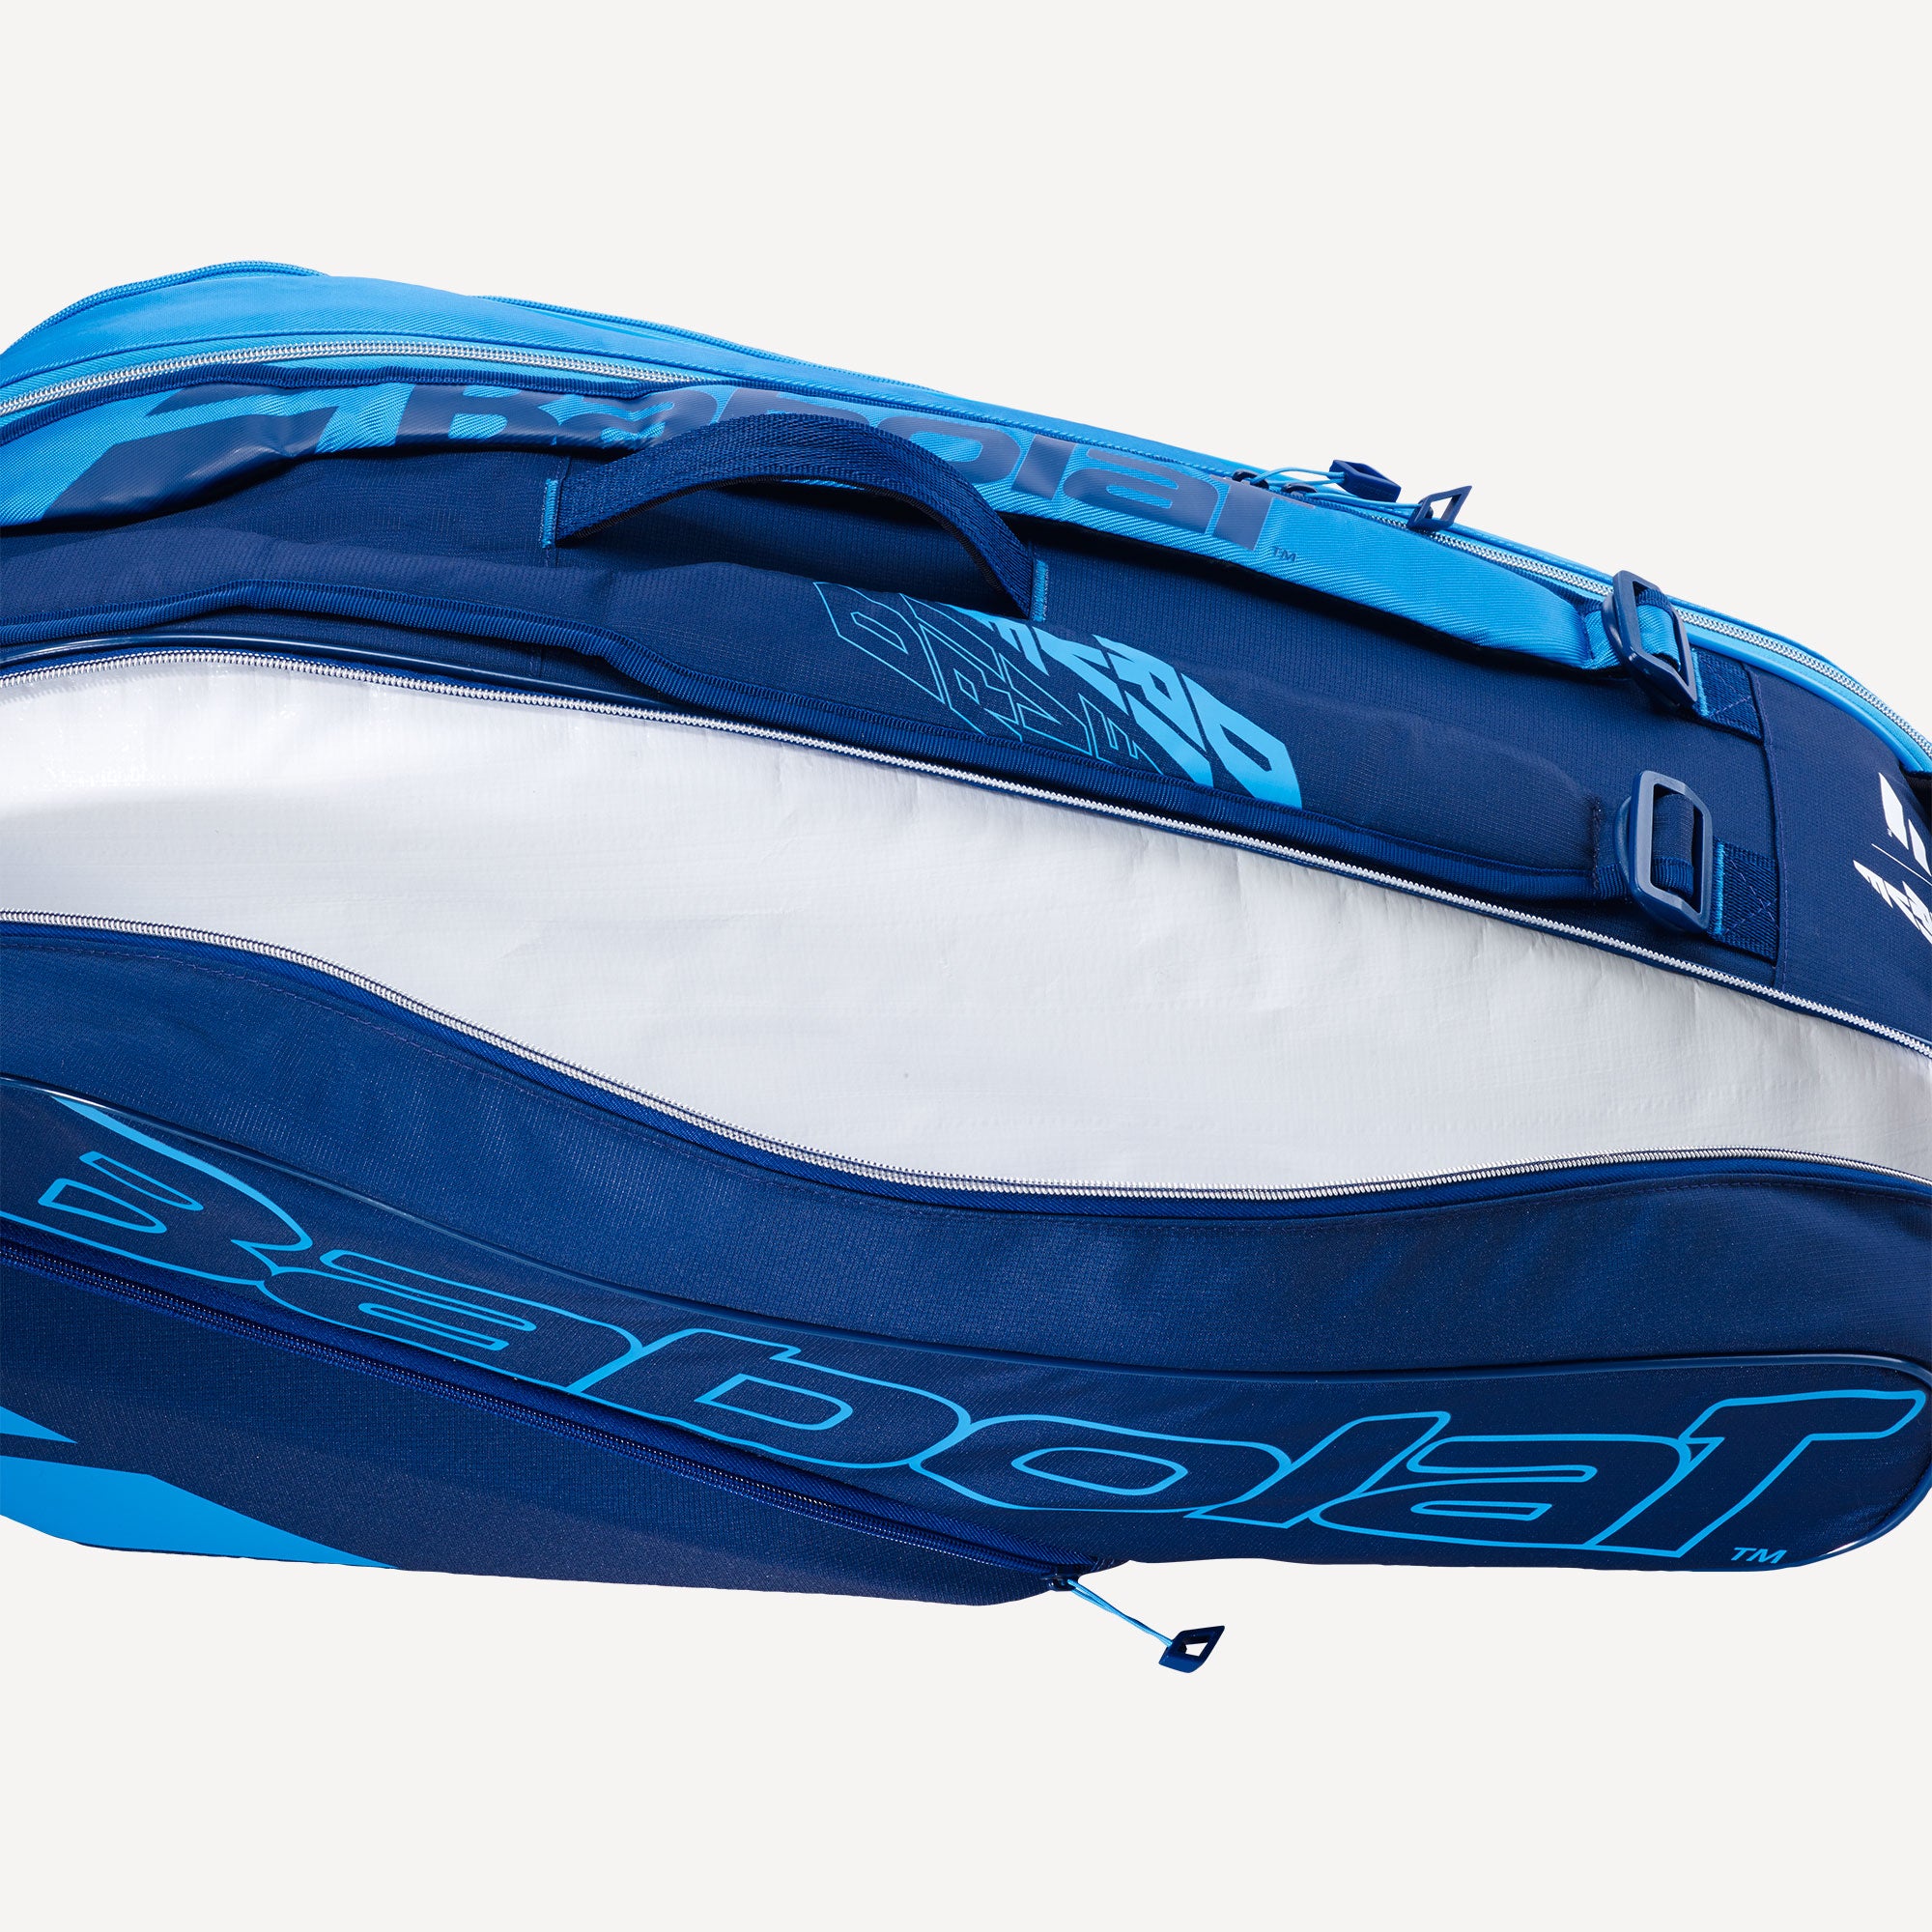 Babolat Pure Drive RH X6 Tennis Bag Blue (4)